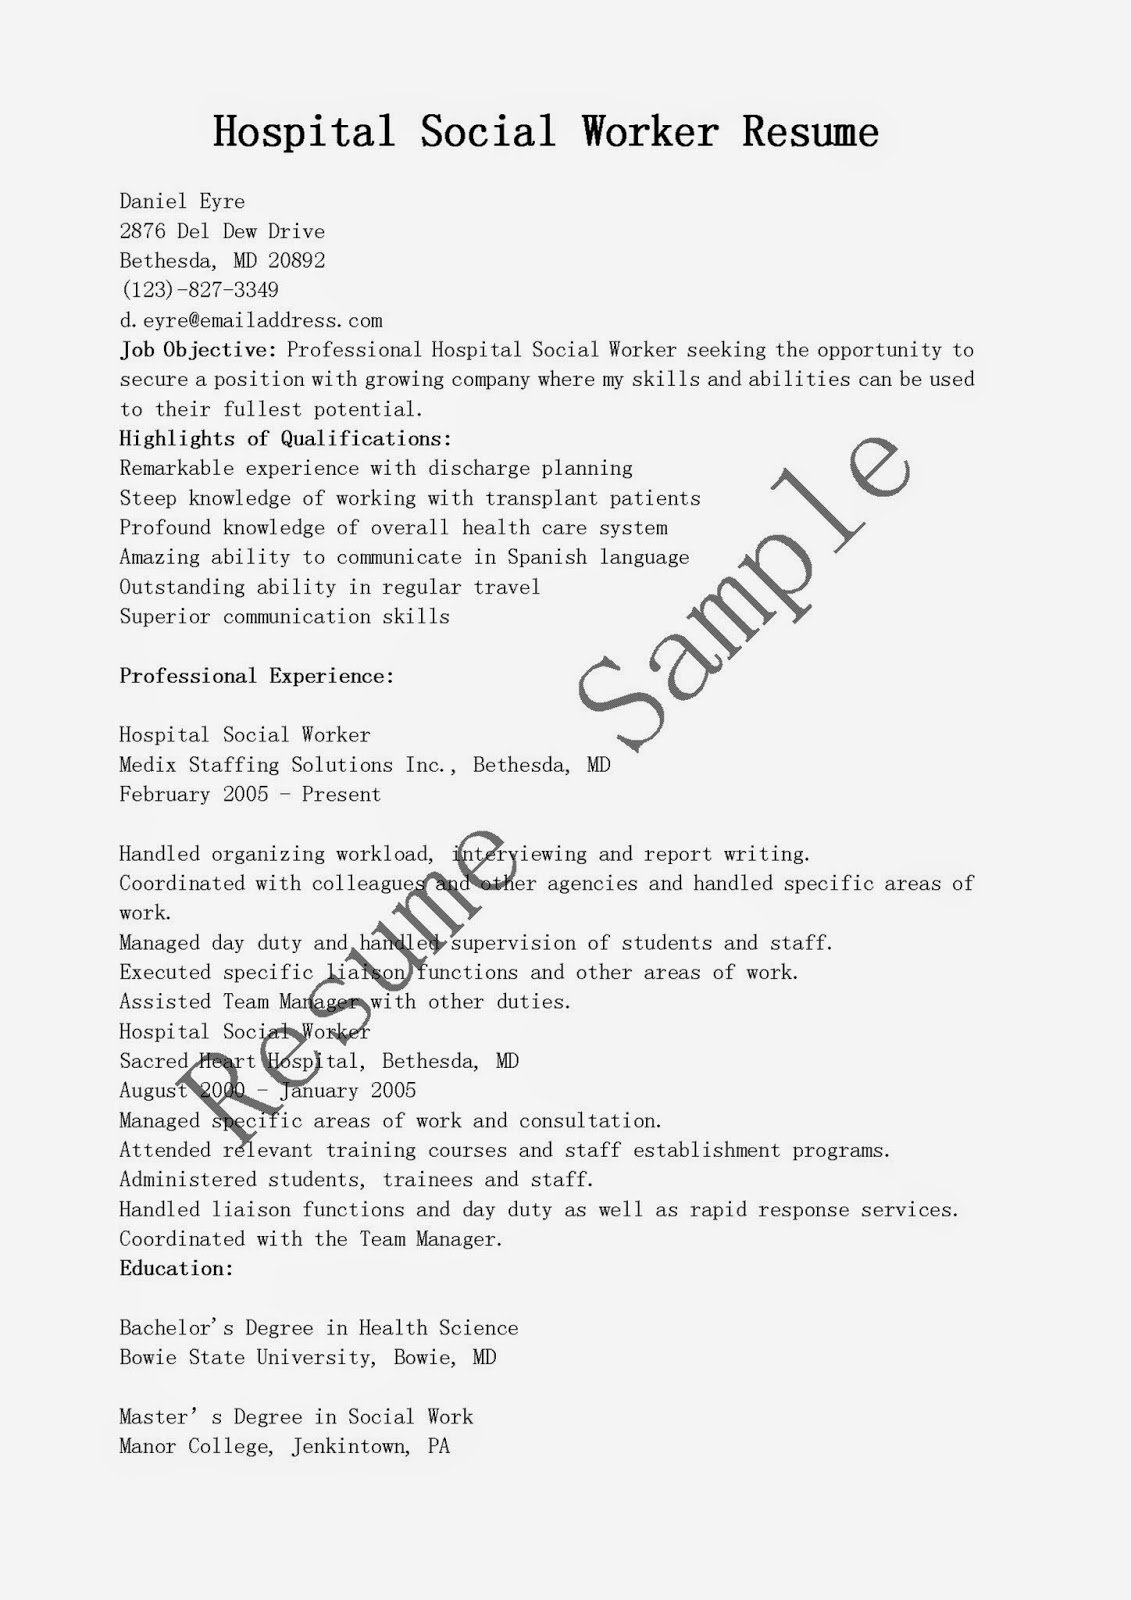 Resume Samples Hospital social Worker Resume Sample